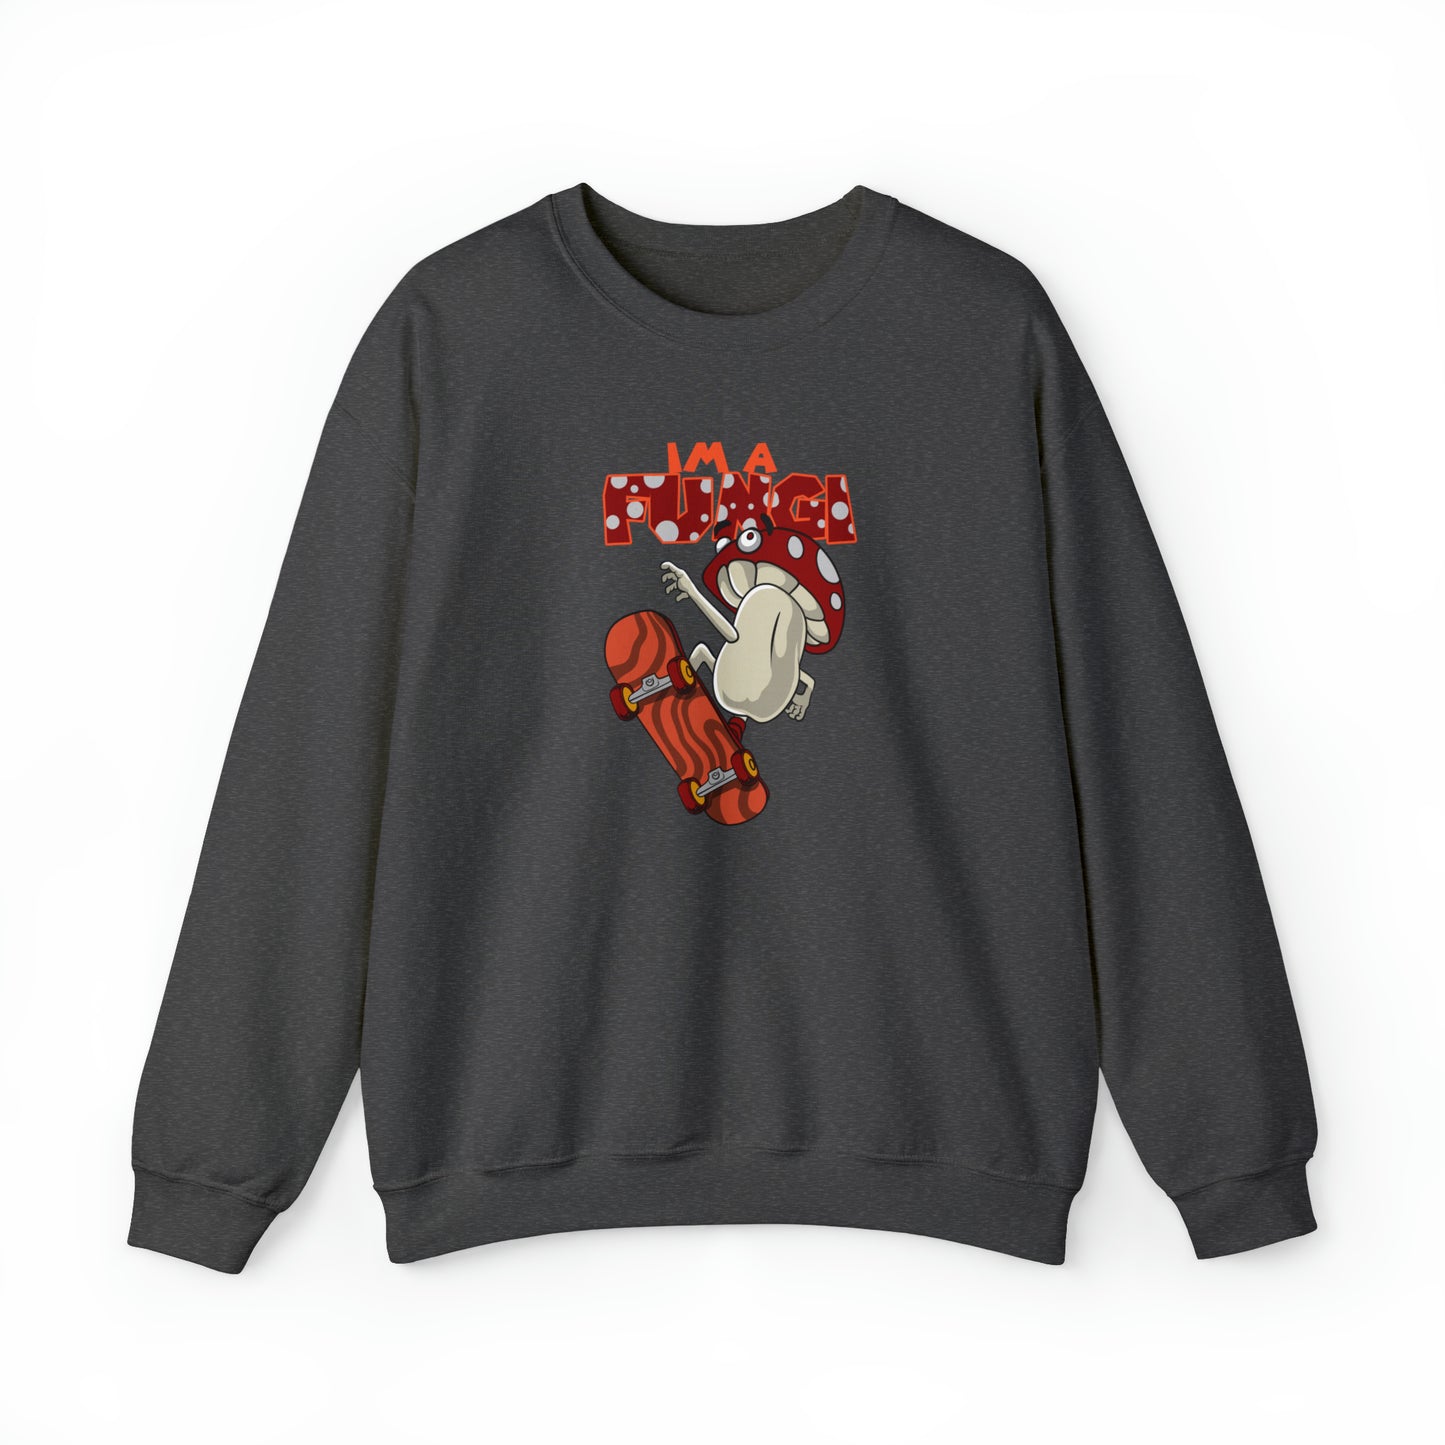 Custom Parody Crewneck Sweatshirt, I'm a FUNGI Design